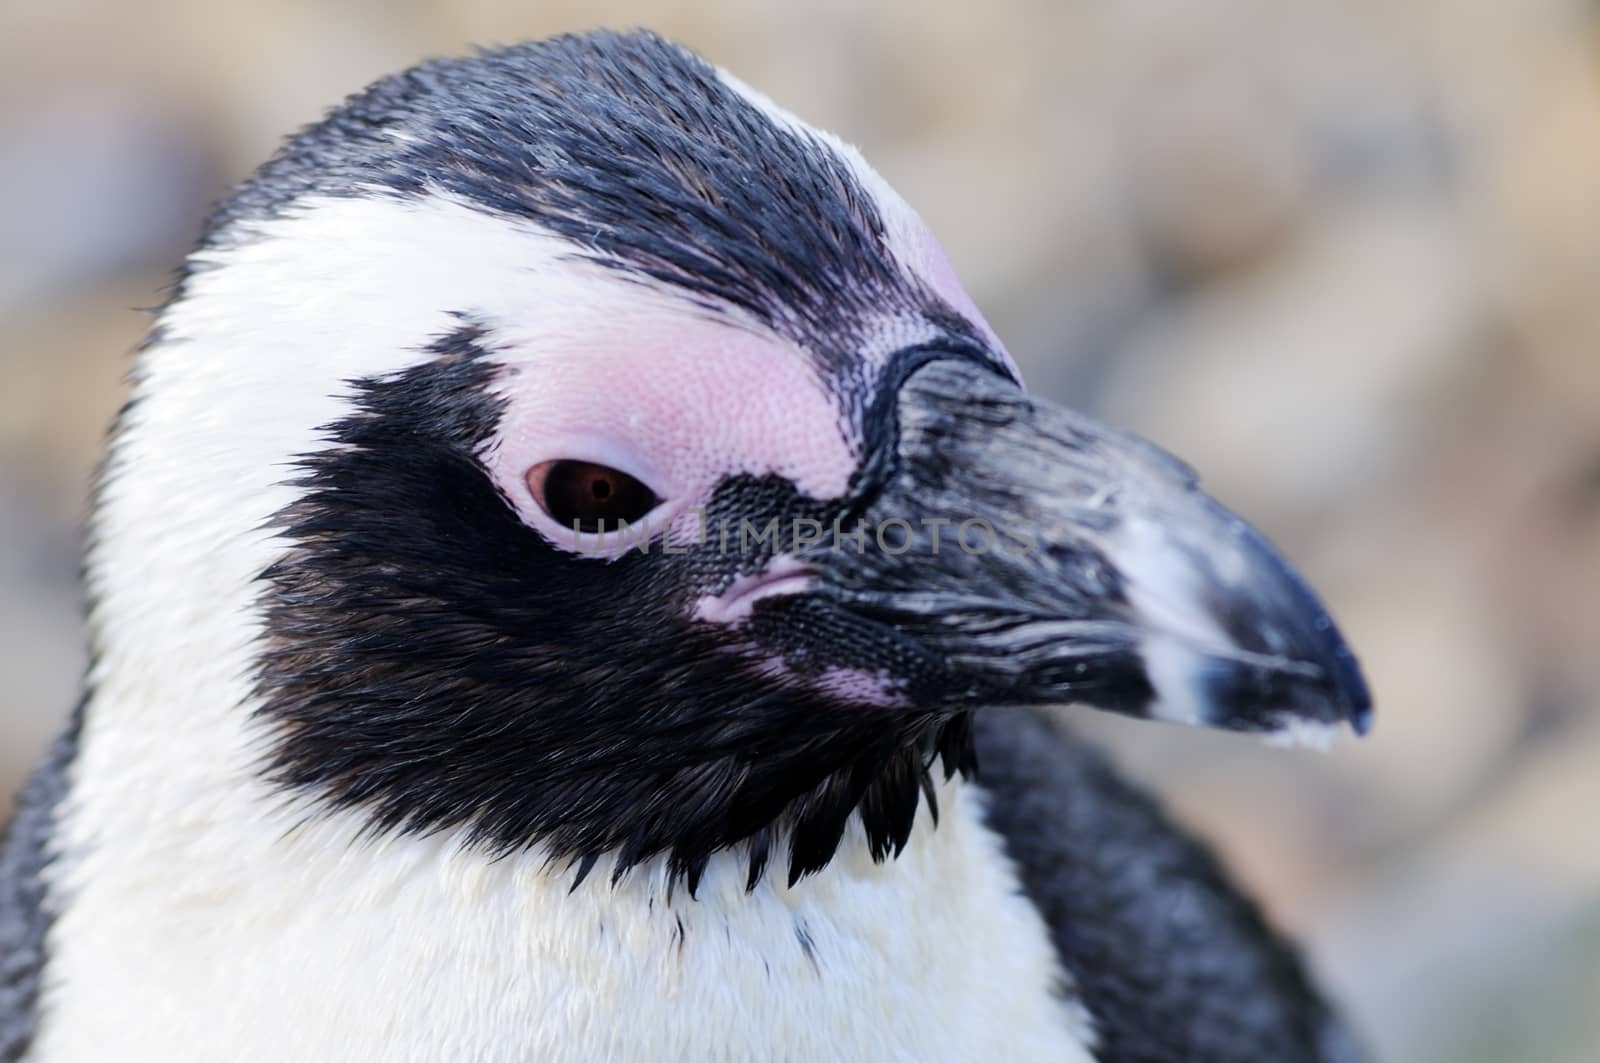 Humboldt penguin closeup profile of head and beak